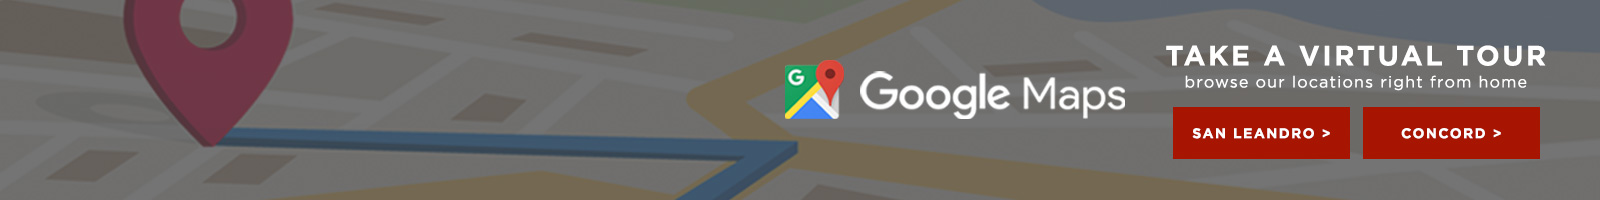 Google Maps Virtual Tour